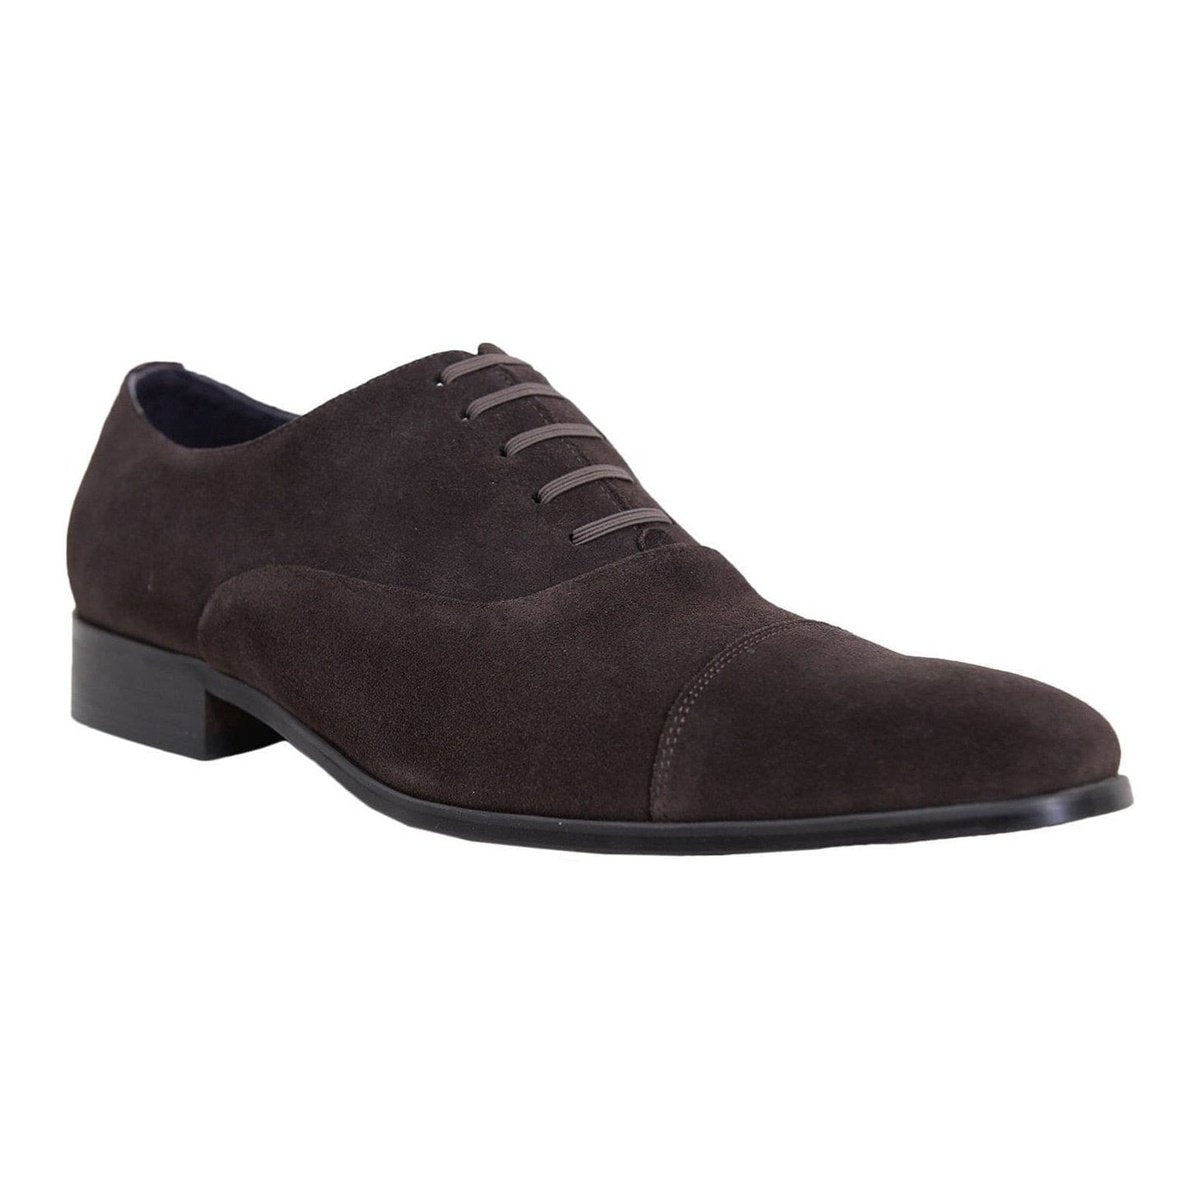 Carrucci Shoes For Amazon 13 D-M Carrucci Mens Brown Suede Cap Toe Oxford Leather Dress Shoes